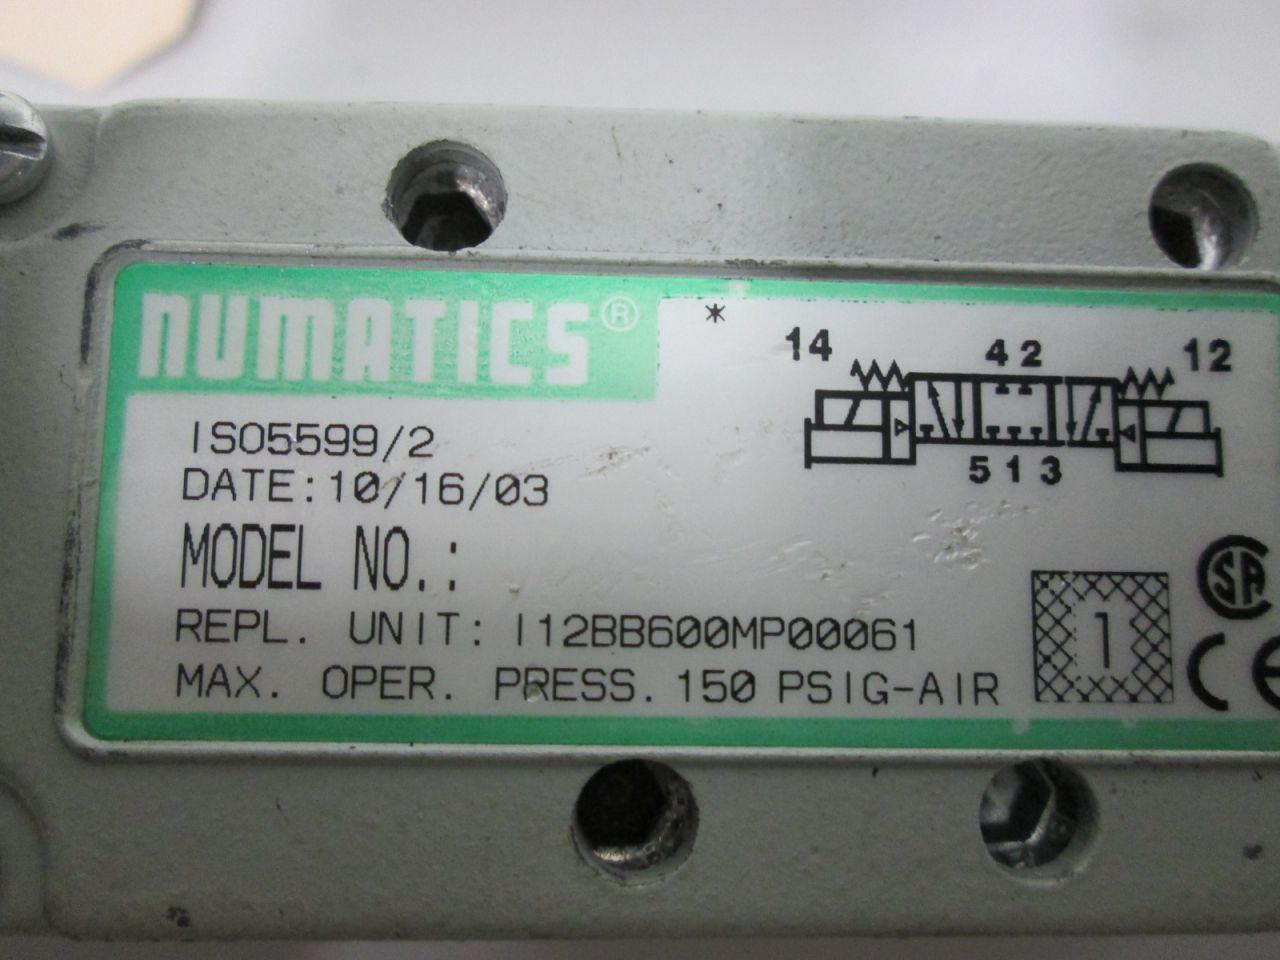 Numatics I12BB600MP00061 Solenoid Valve 